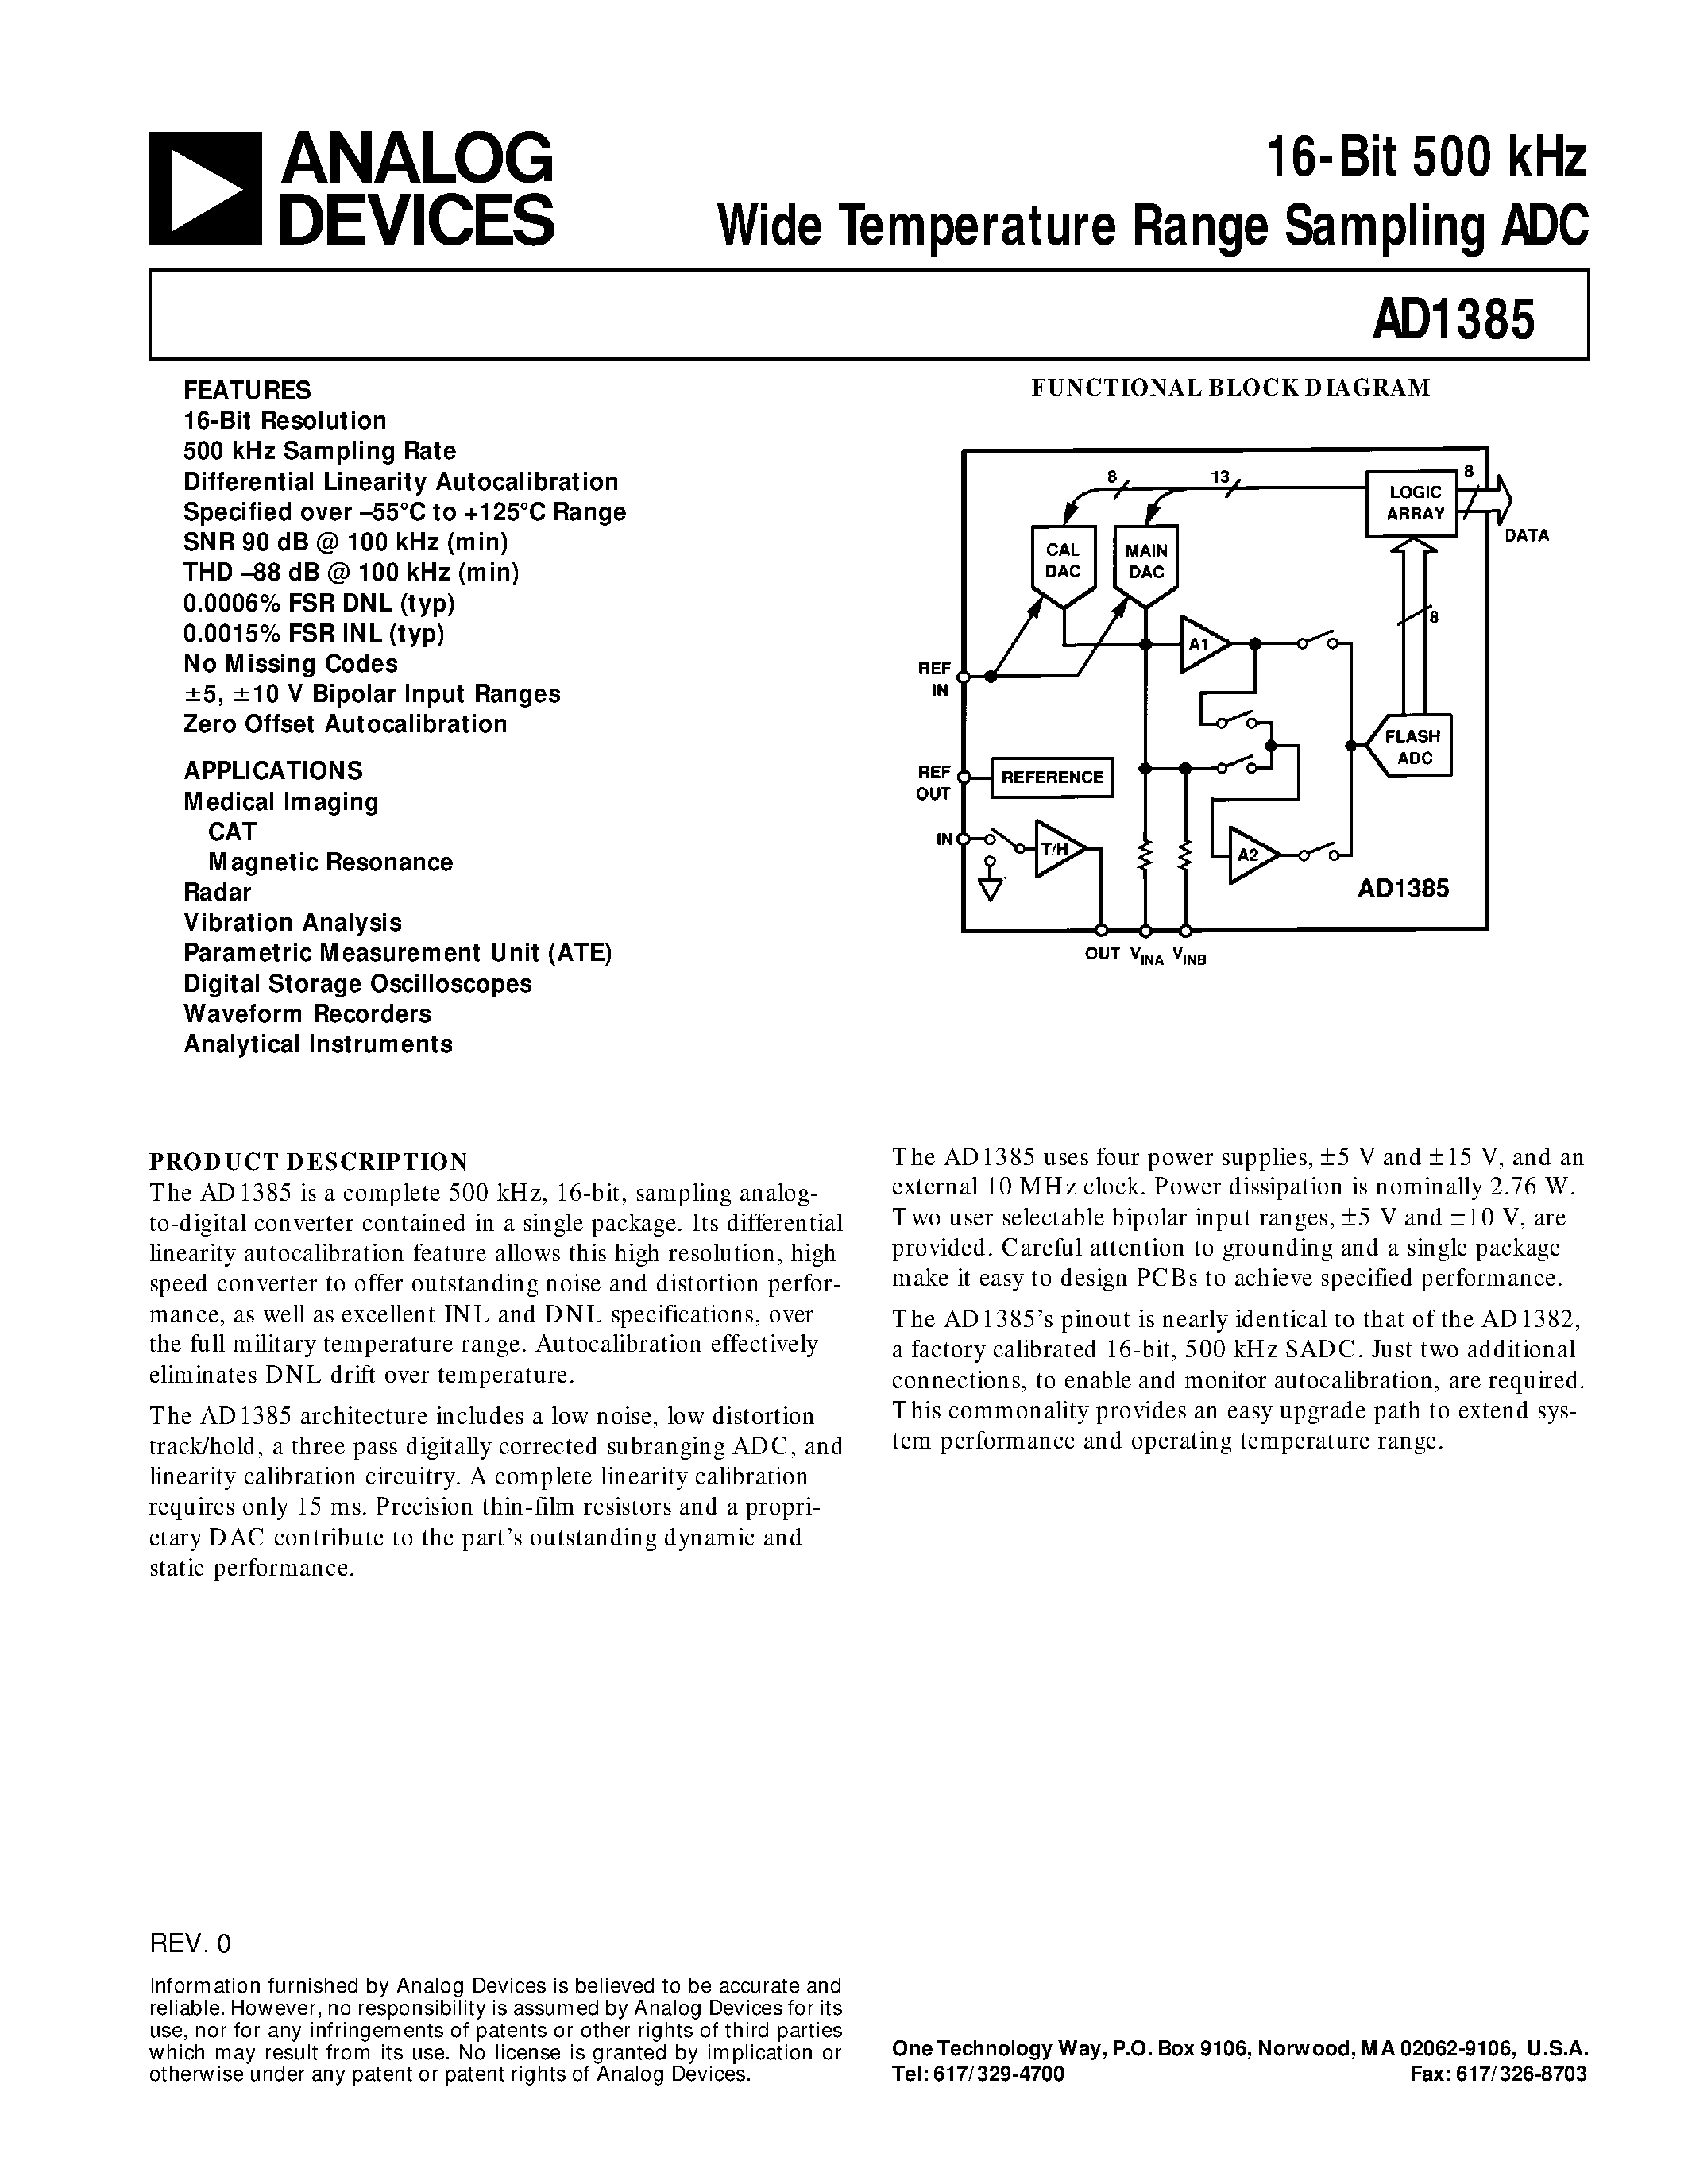 Datasheet AD1385 - 16-Bit 500 kHz Wide Temperature Range Sampling ADC page 1